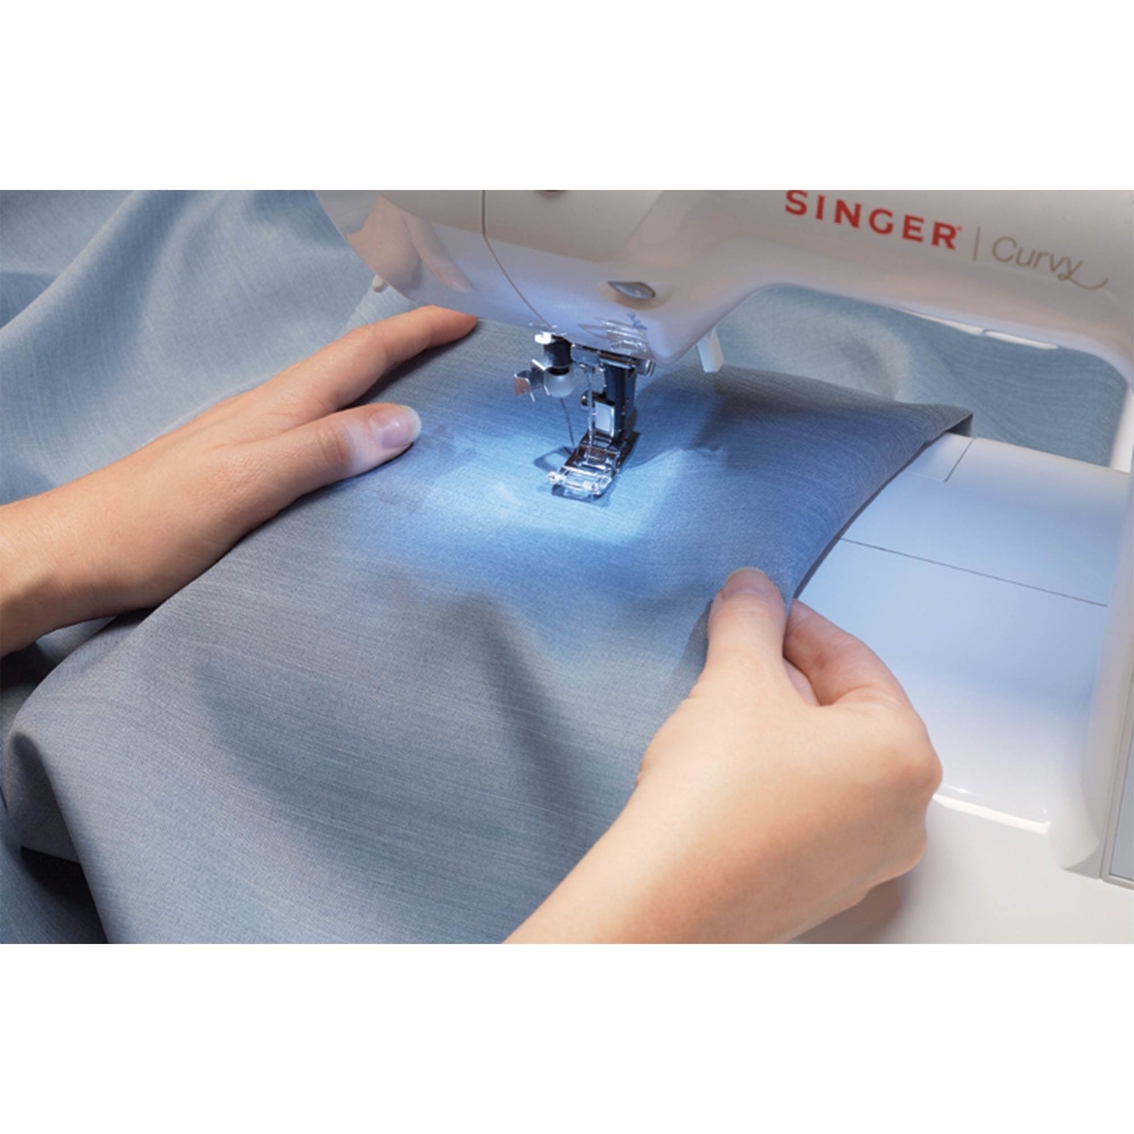 Singer Curvy 8763 Sewing Machine - Image 4 of 6